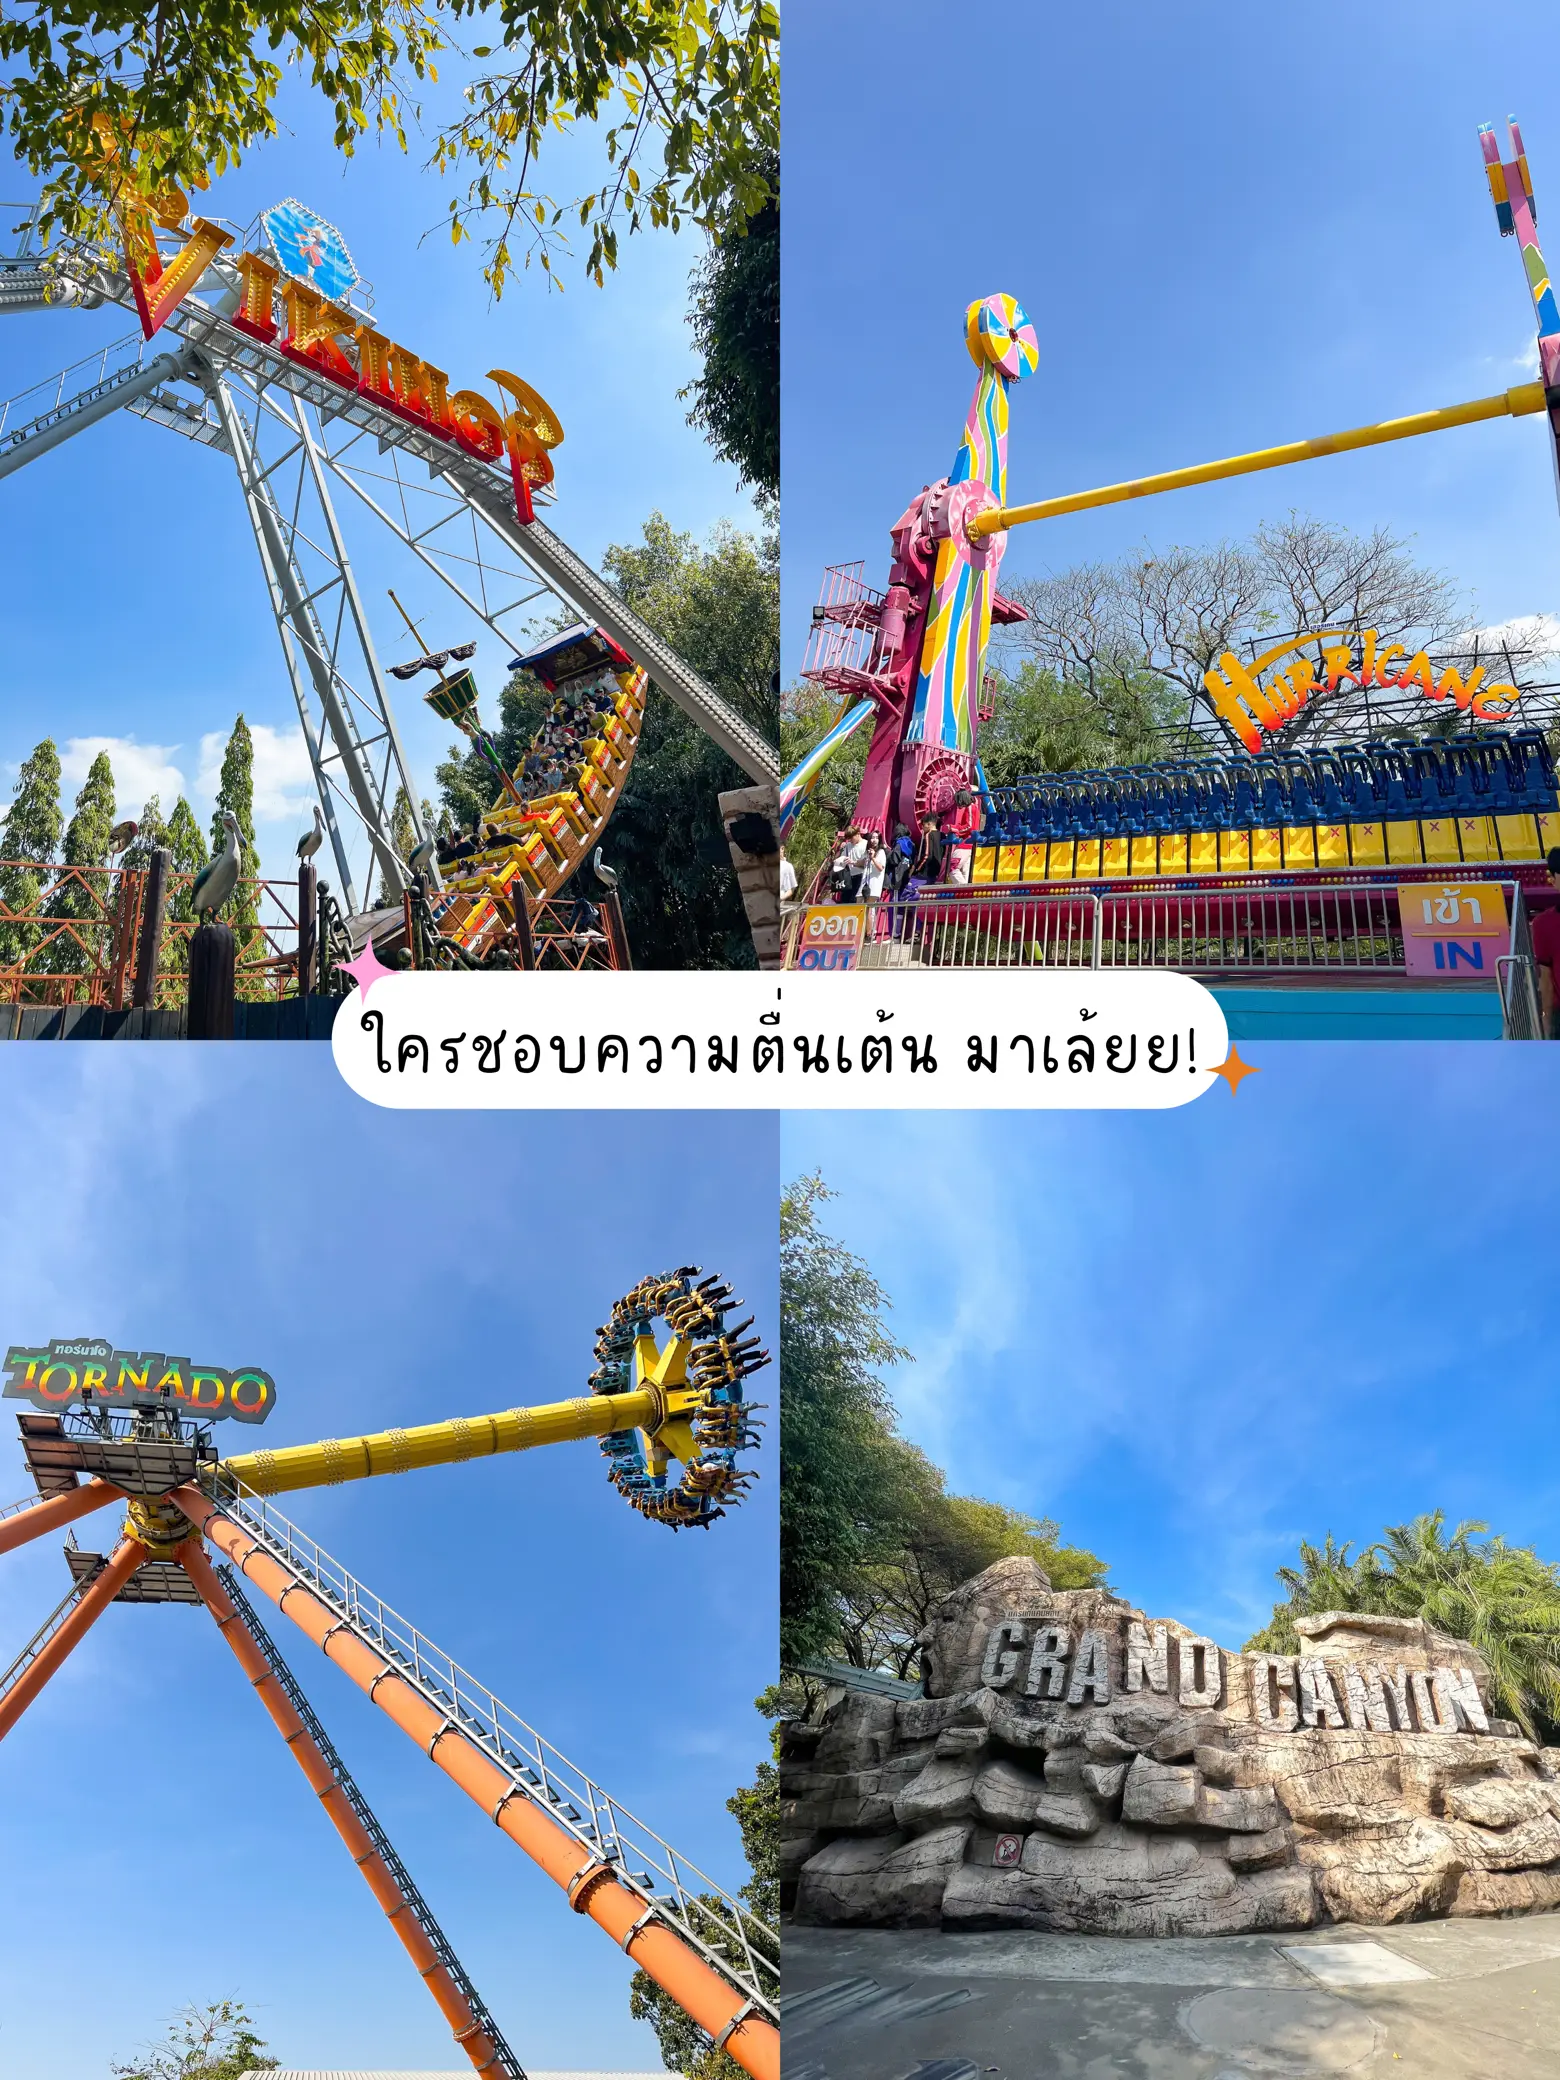 Grand Canyon ride in Dream World amusement park in Bangk…